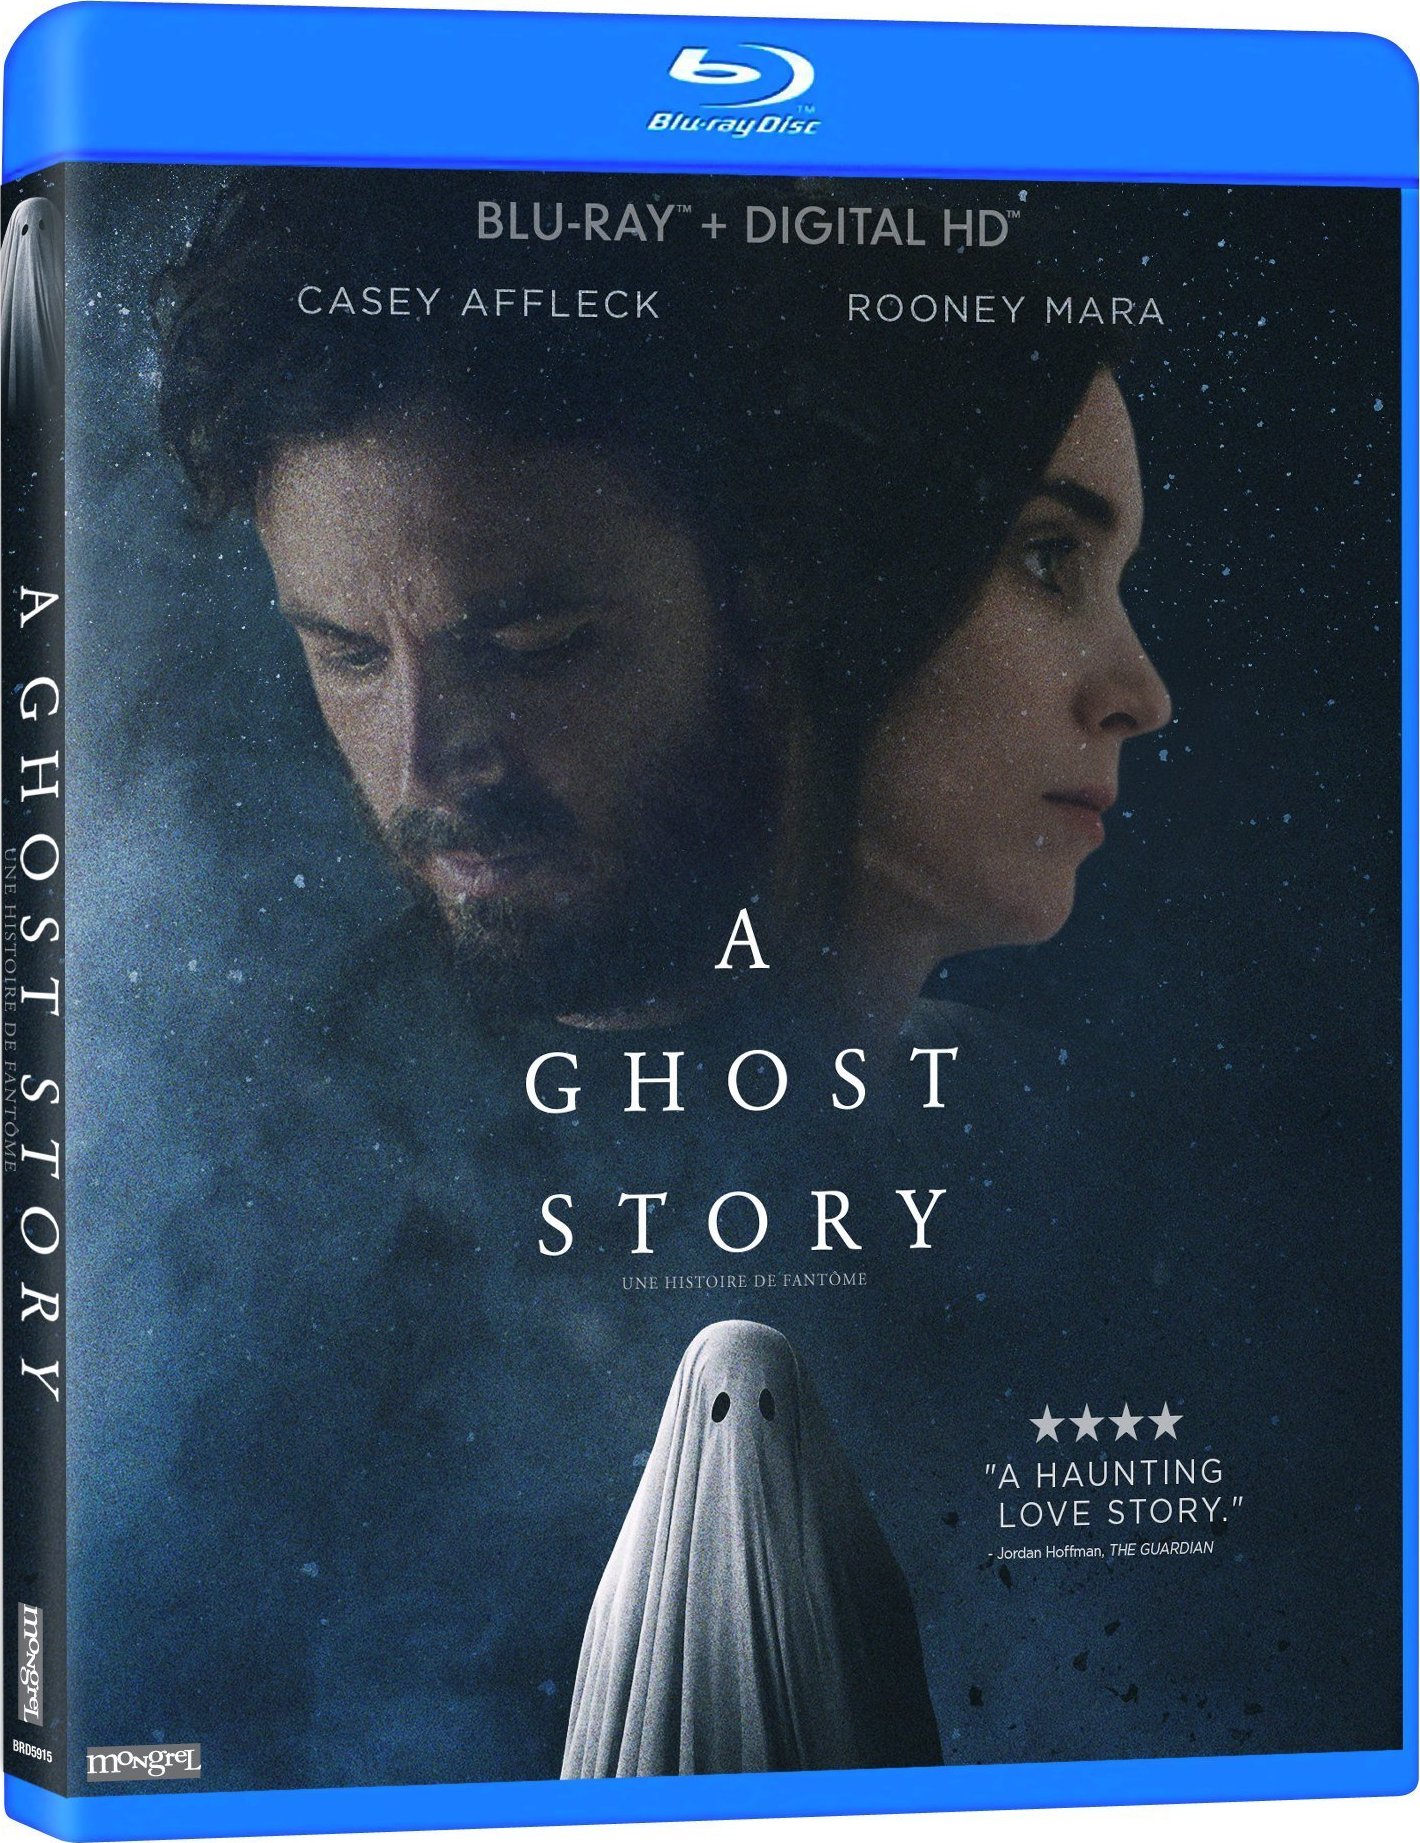 [鬼魅浮生].A.Ghost.Story.2017.BluRay.1080p.AVC.DTS-HD.MA.5.1-HDHome  22.37G-1.jpg